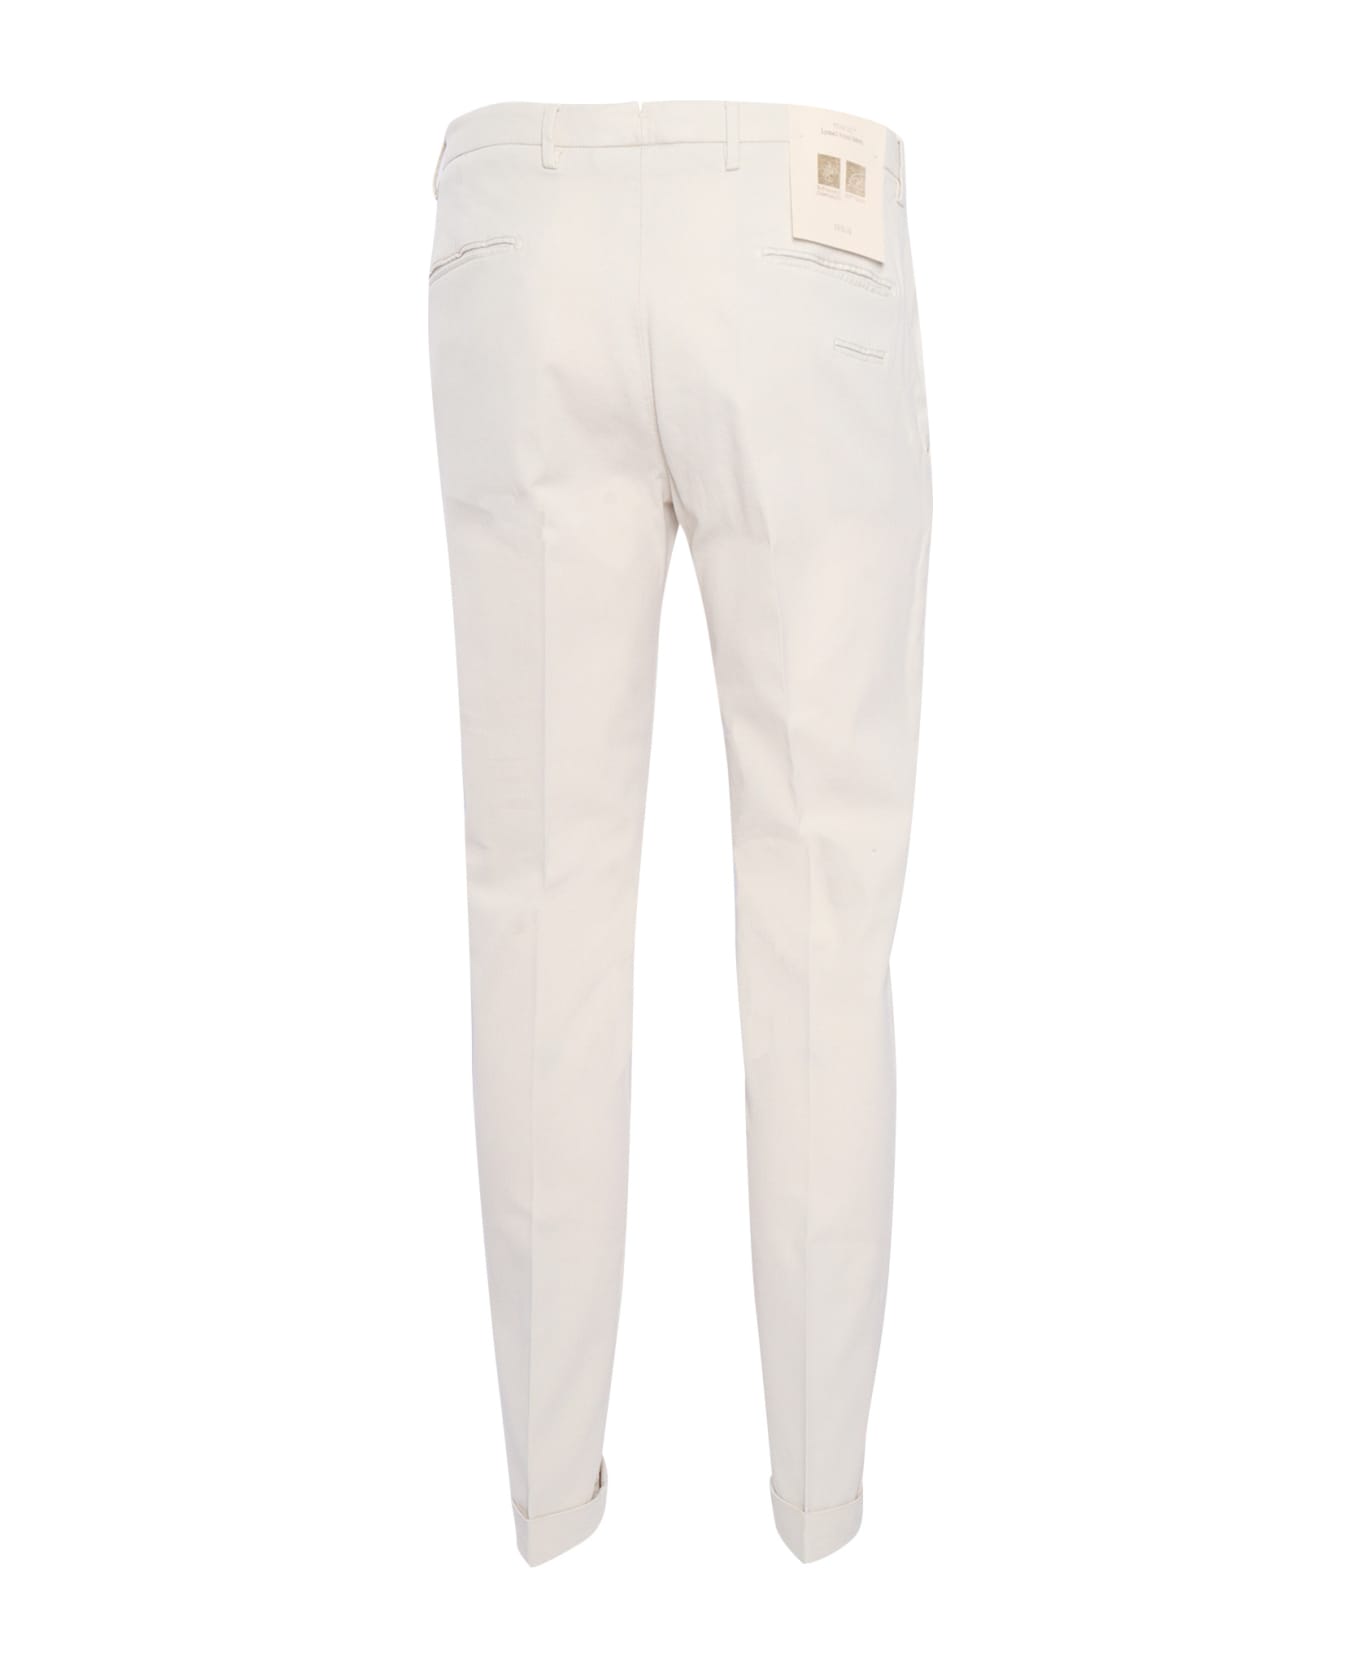 Briglia 1949 White Trousers - BEIGE ボトムス